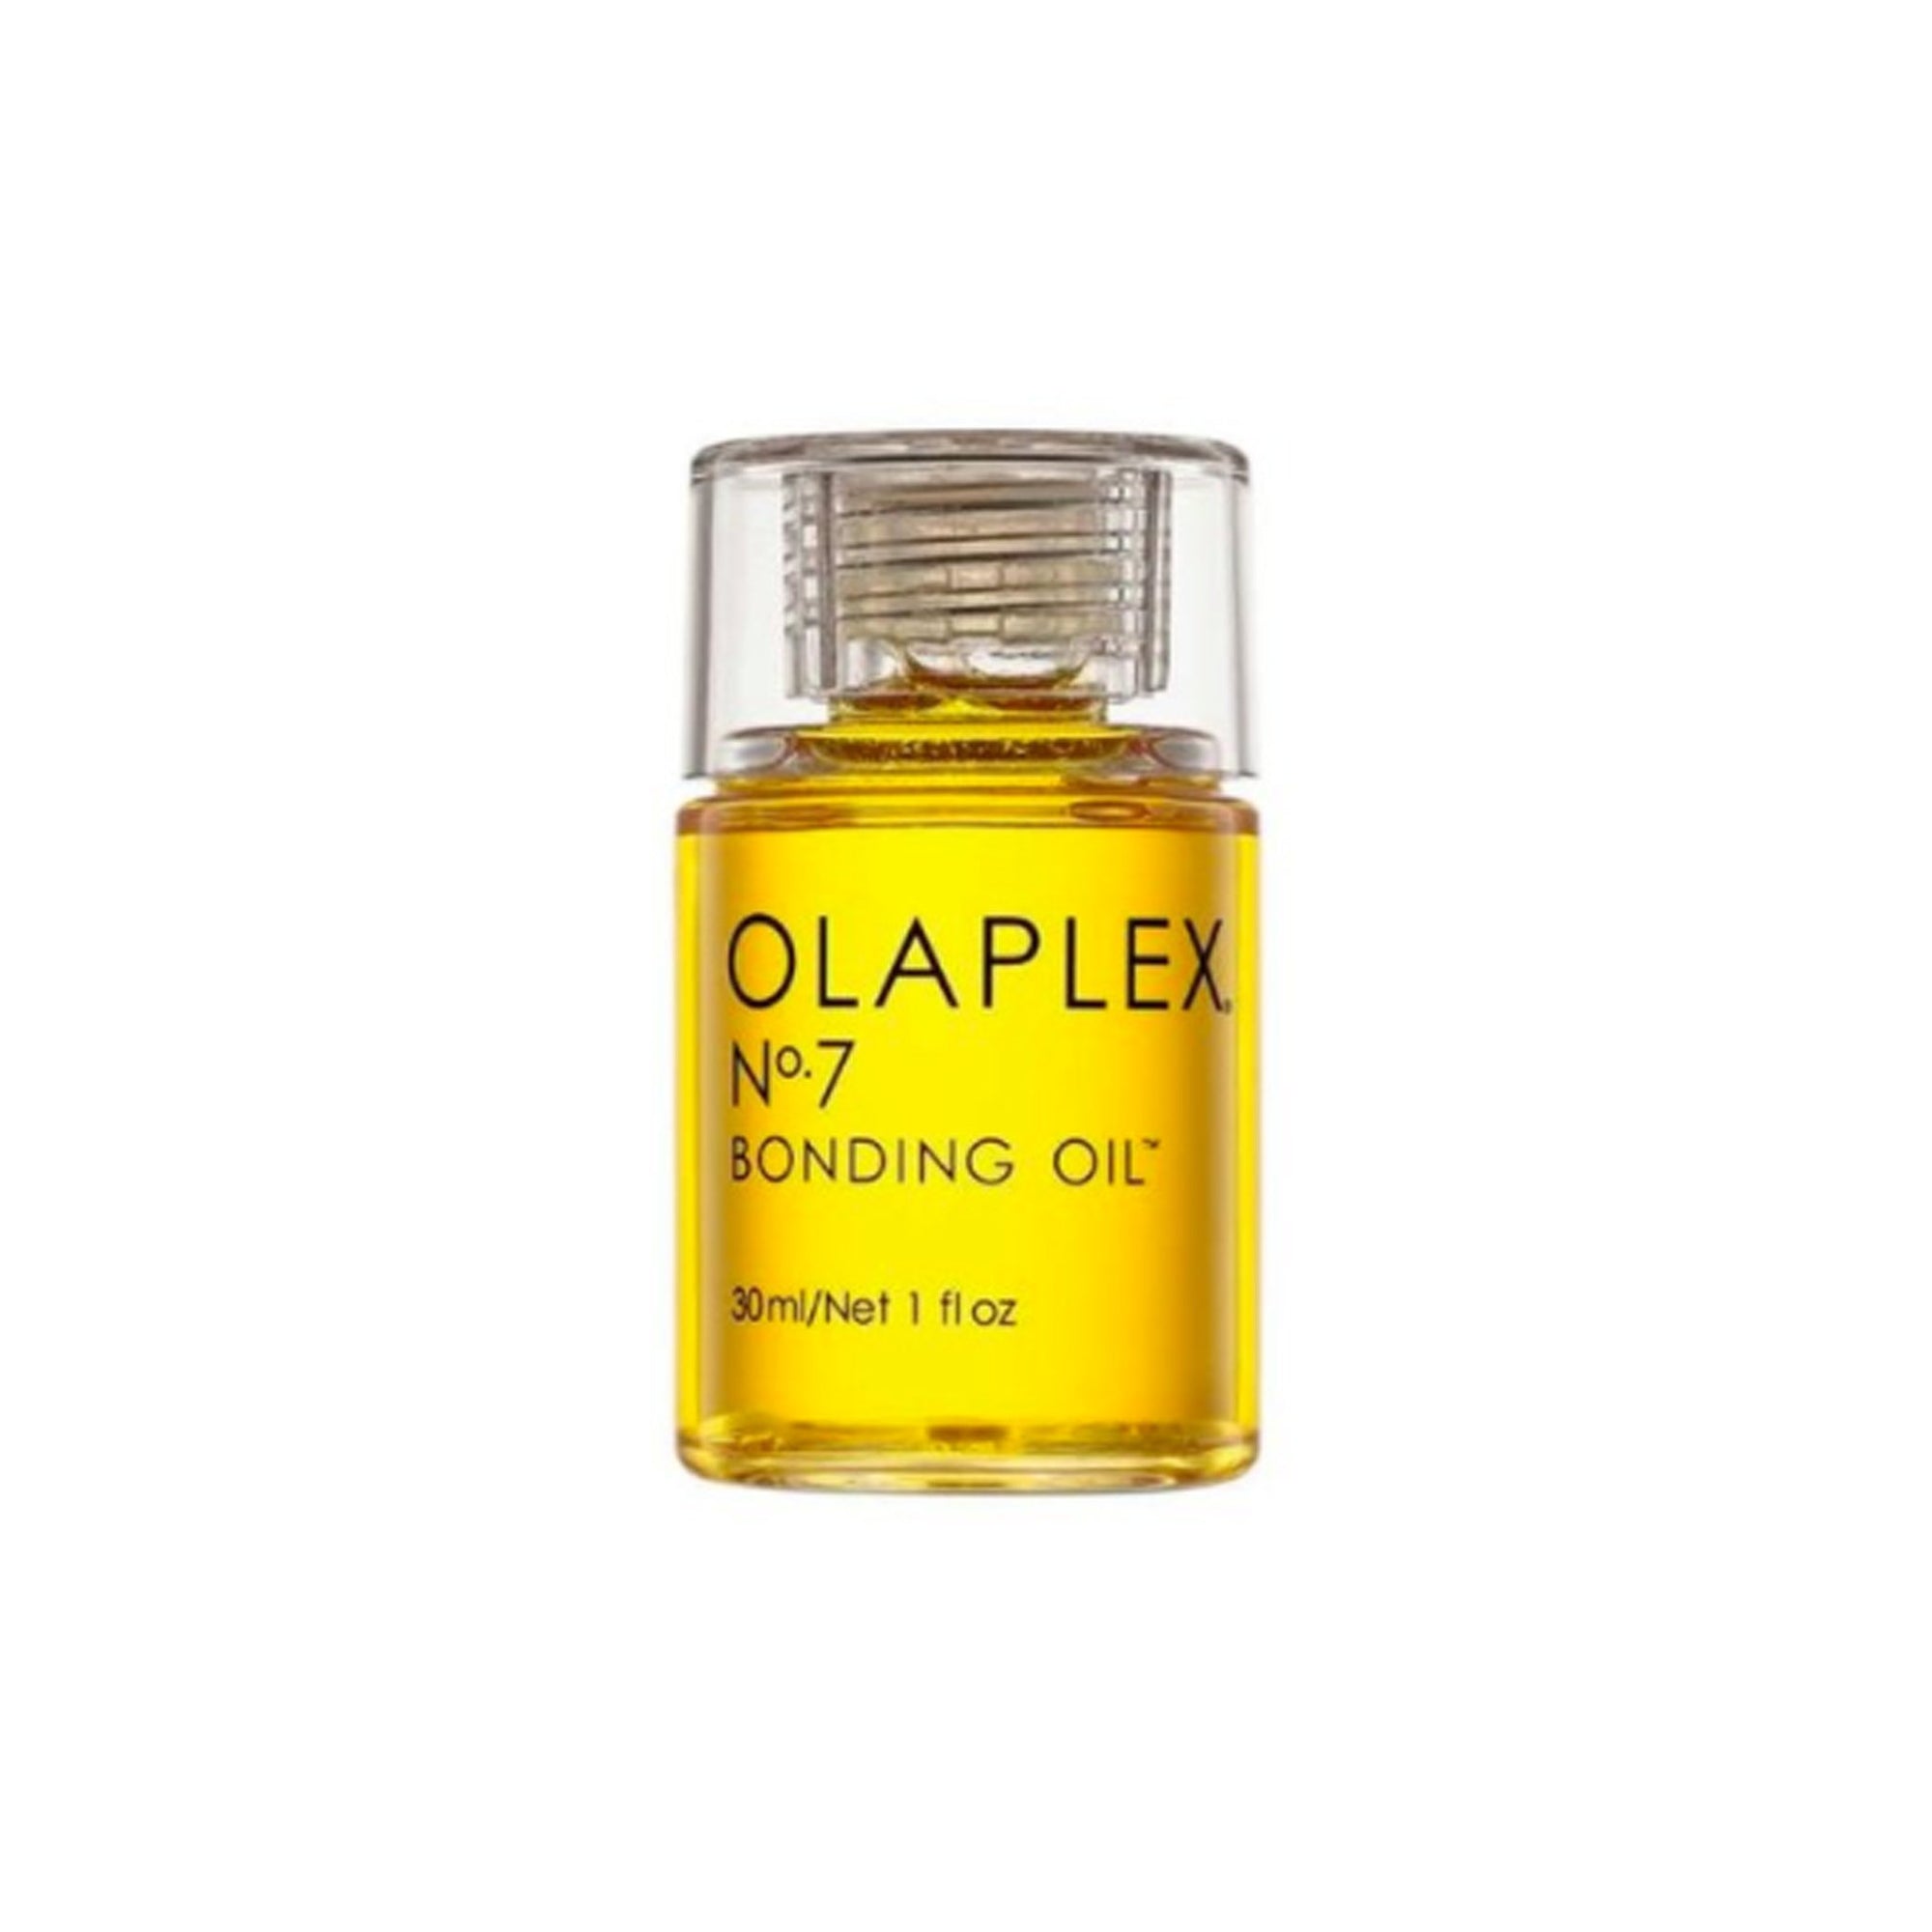 Olaplex no. 7 Bonding Oil - Shop Online | Retail Box